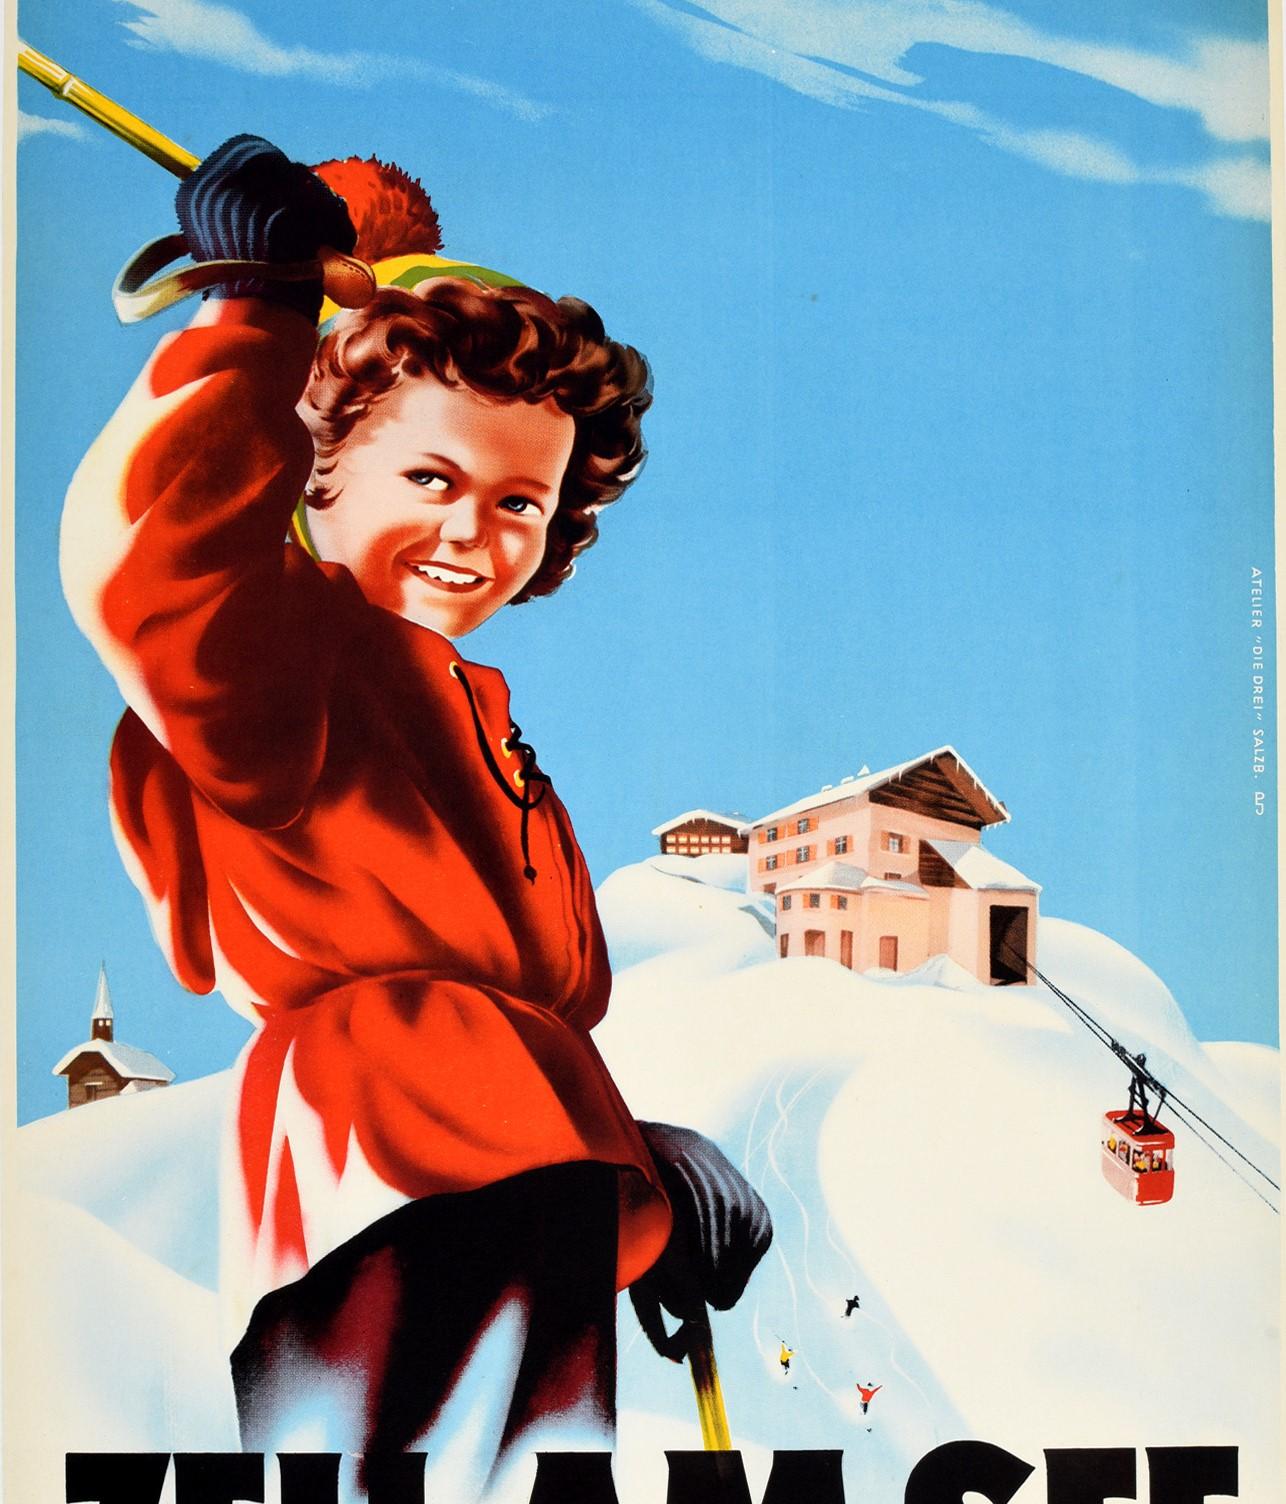 Austrian Original Vintage Poster Zell Am See Austria Mountain Winter Sport Skiing Travel